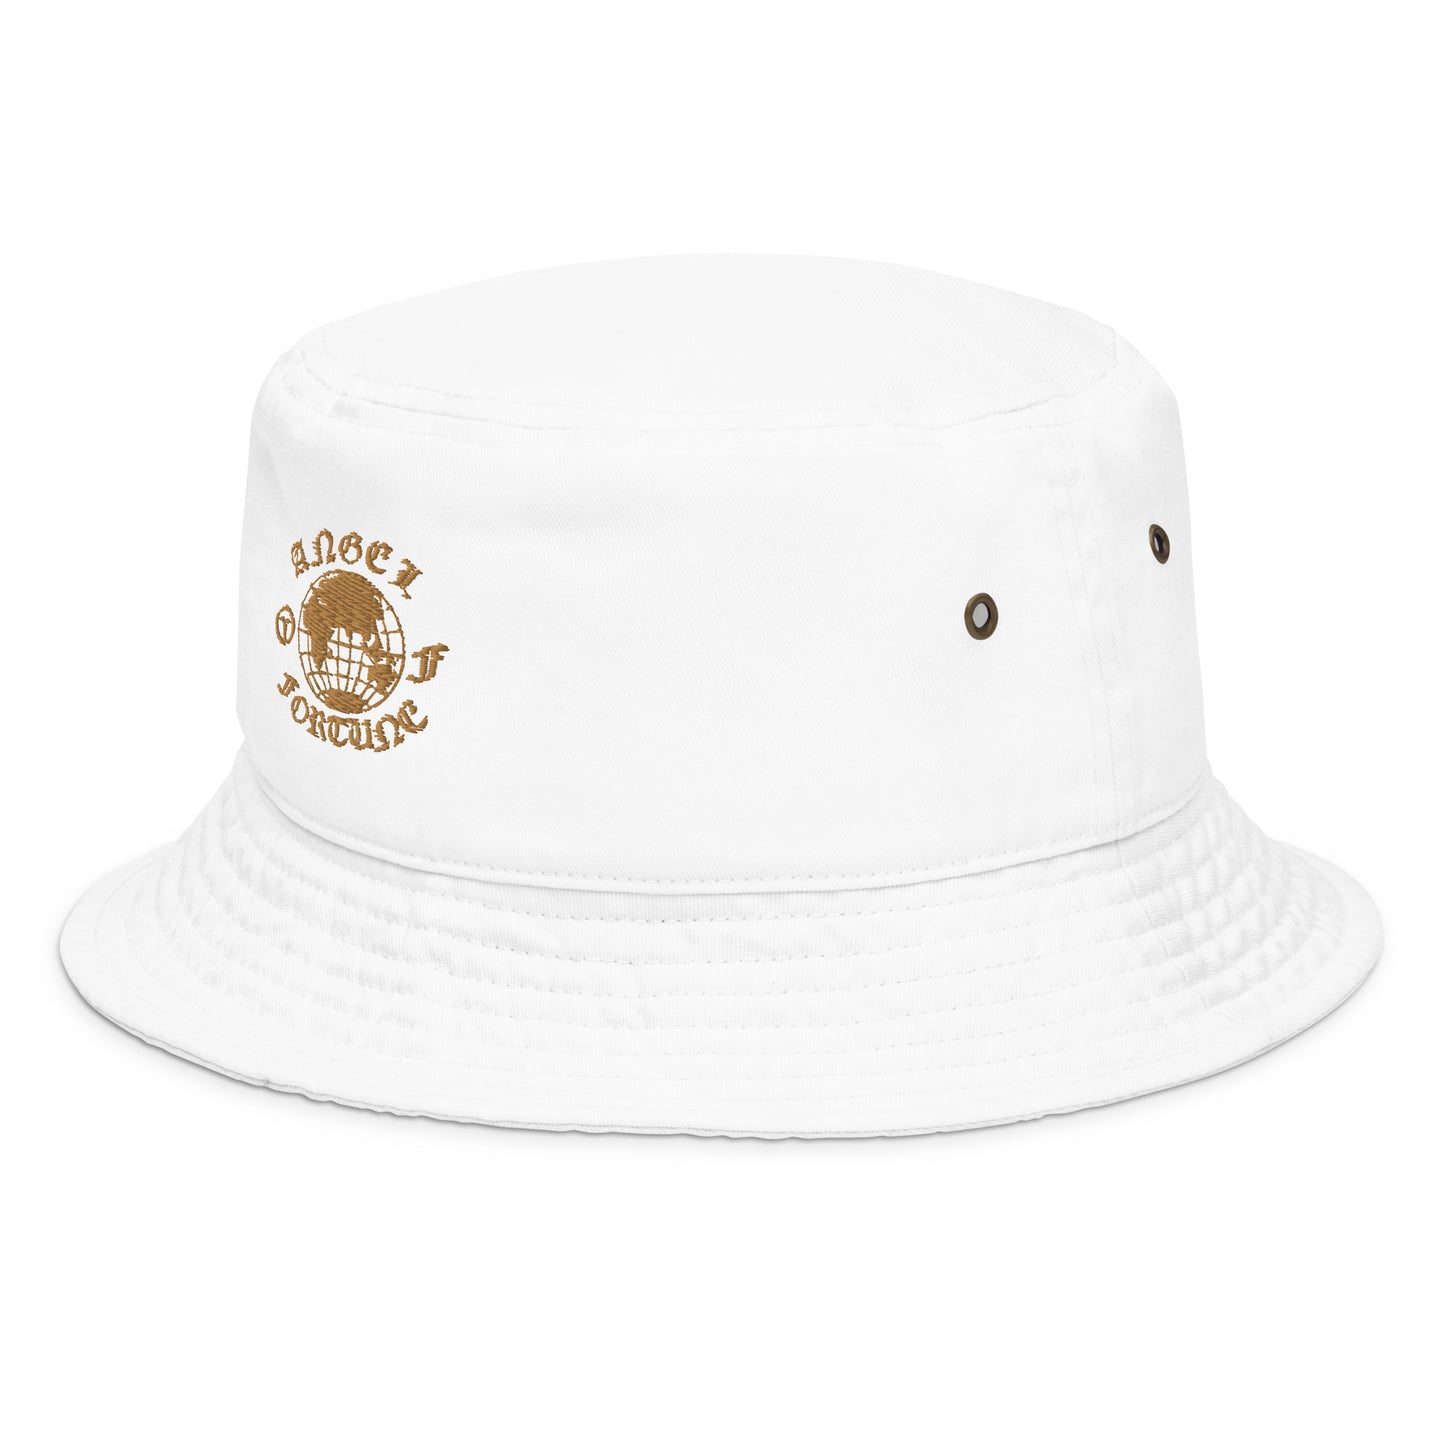 Global Angel - Fashion Bucket Hat